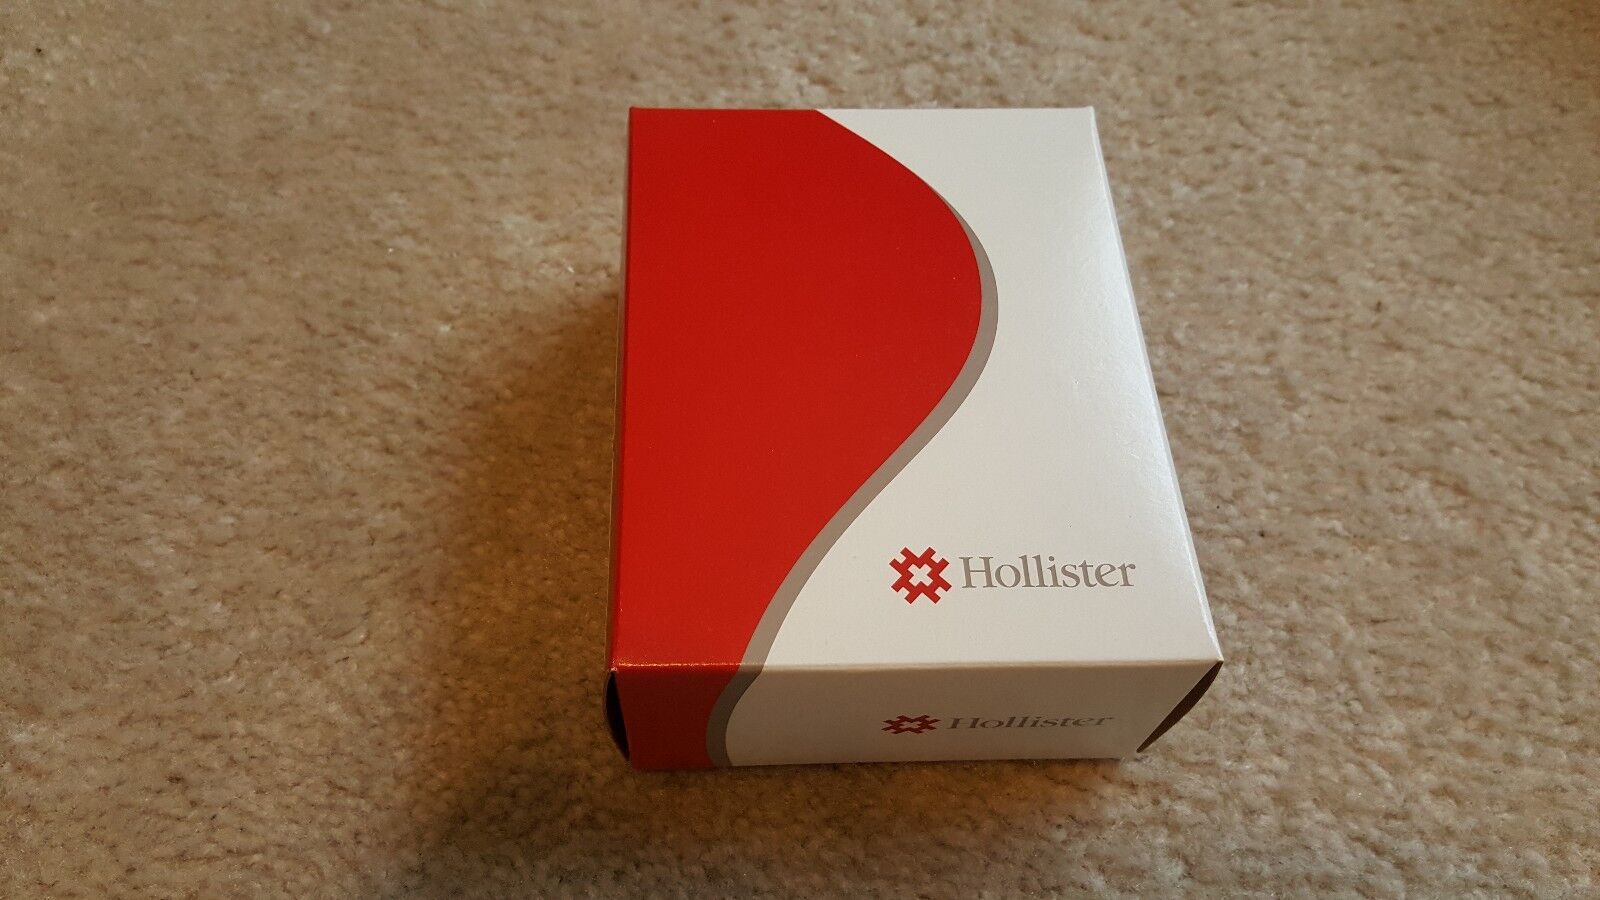 Hollister New Image Convex FlexWear Skin Barrier  1 3/4", Box of 5  #14402